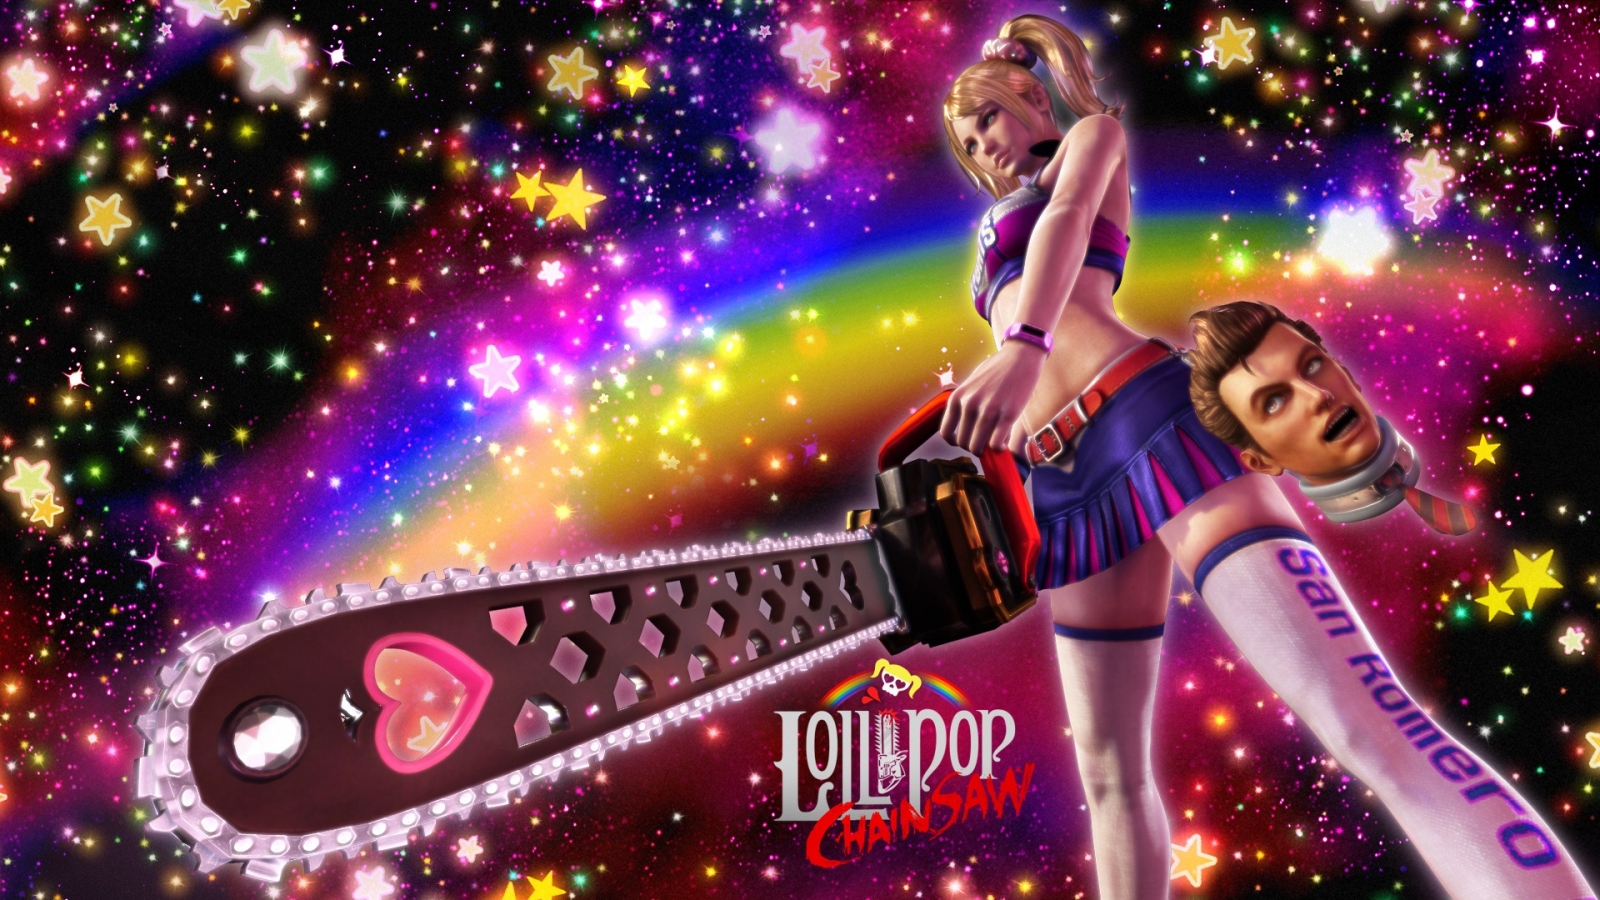 Lollipop Chainsaw hits stores June 12 - GameSpot